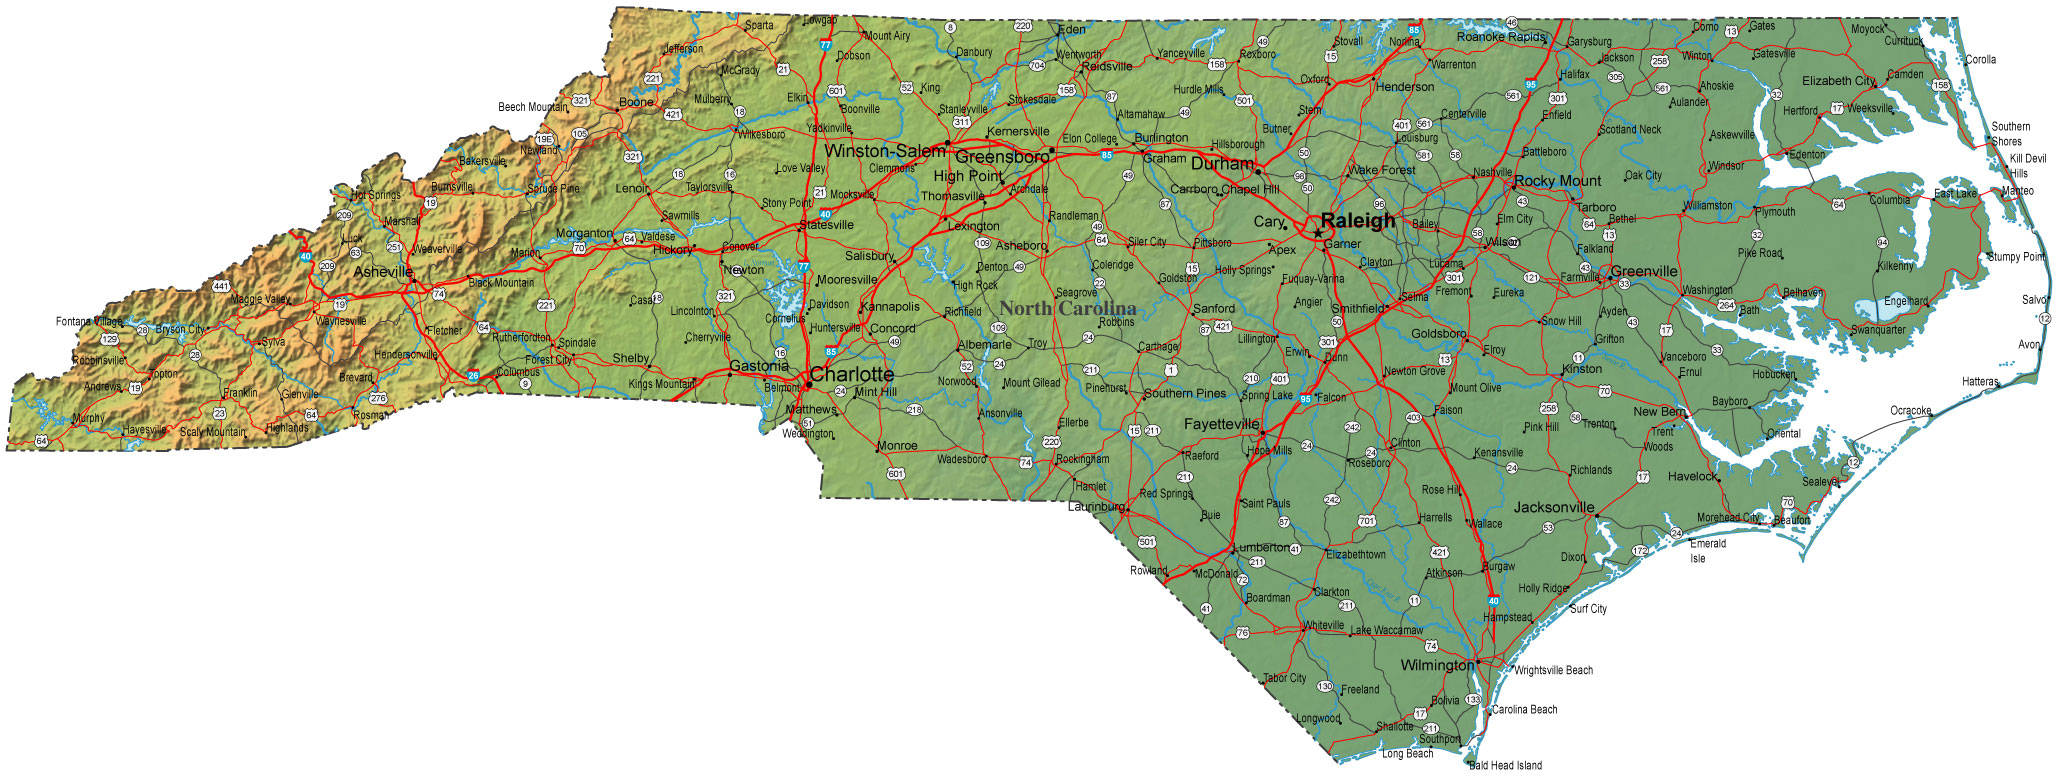 Detailed street map of North Carolina.